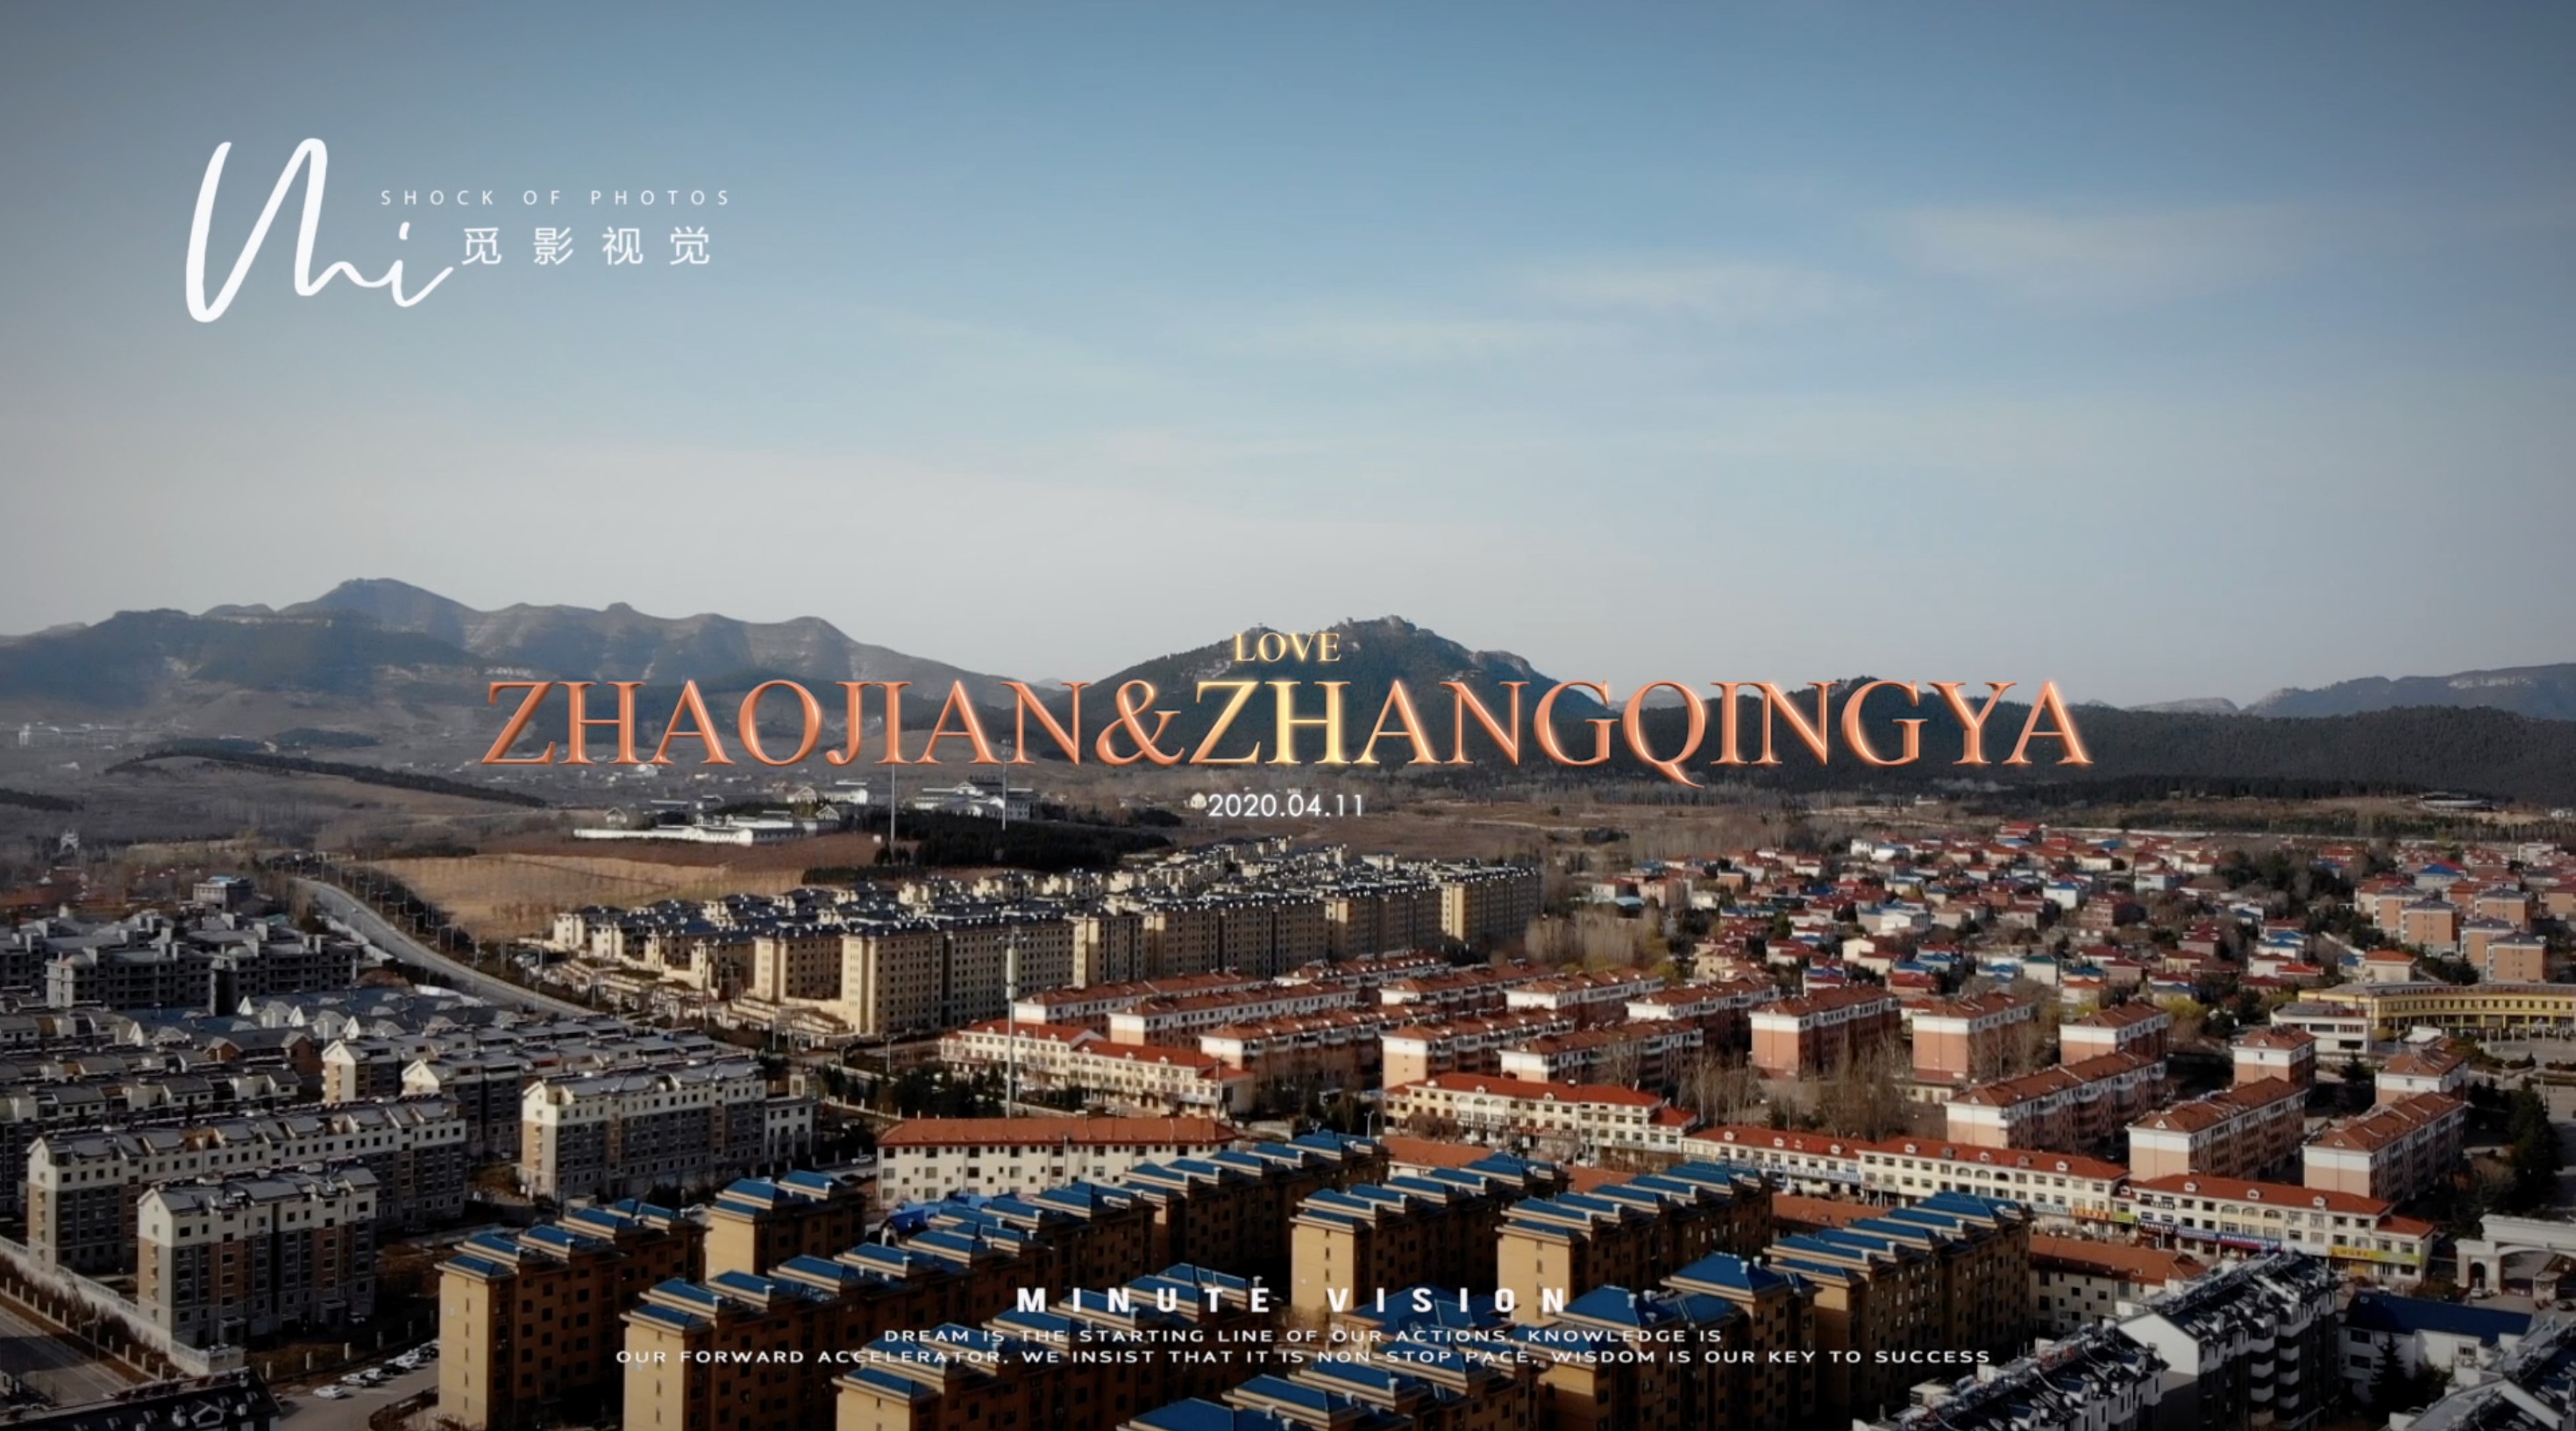 【ZHAO&ZHANG】2020.04.11婚礼电影|觅影视觉出品 